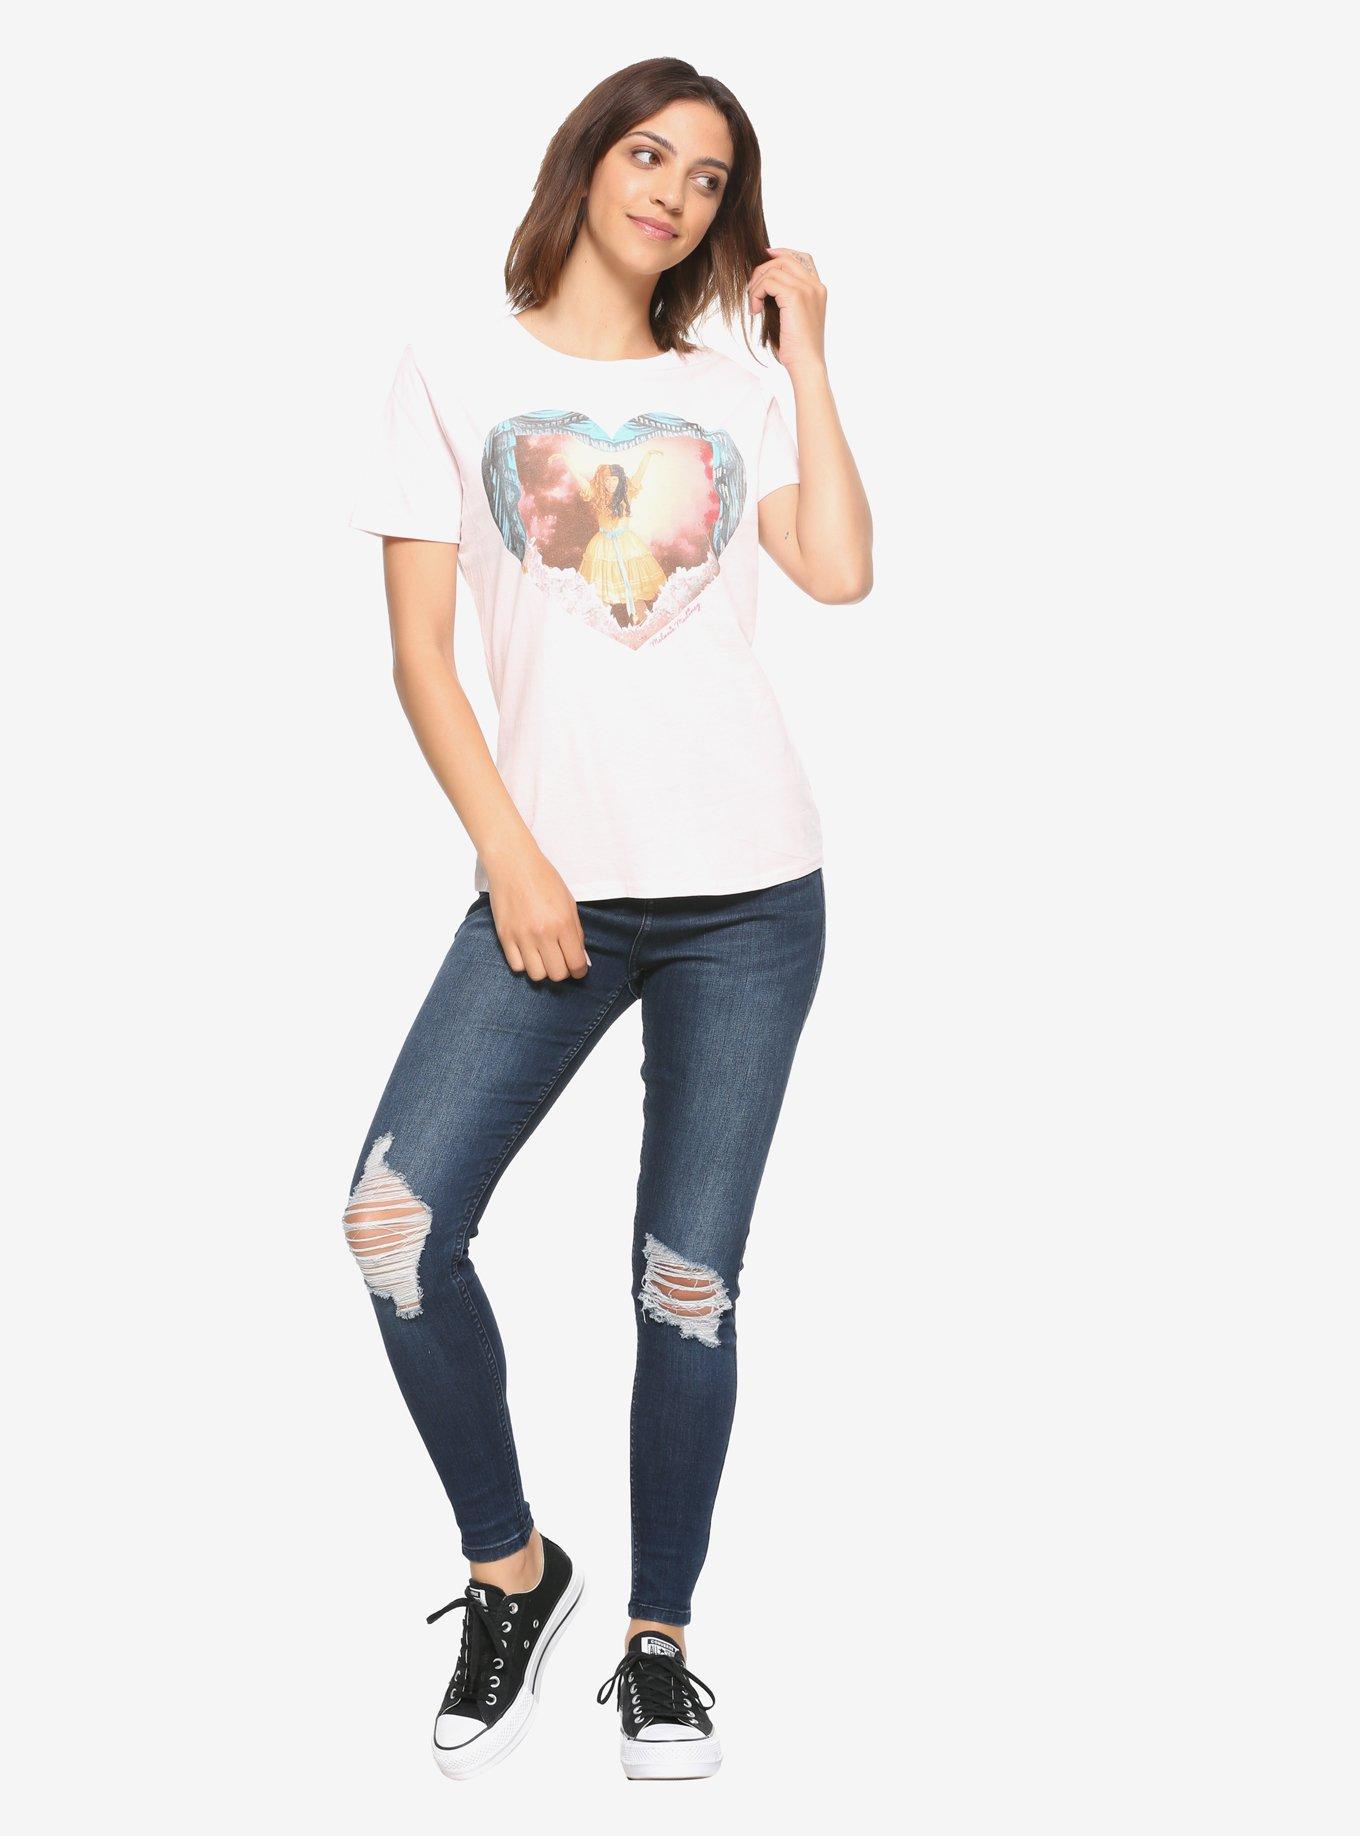 Melanie Martinez Puppet Strings Heart Girls T-Shirt, PINK, alternate